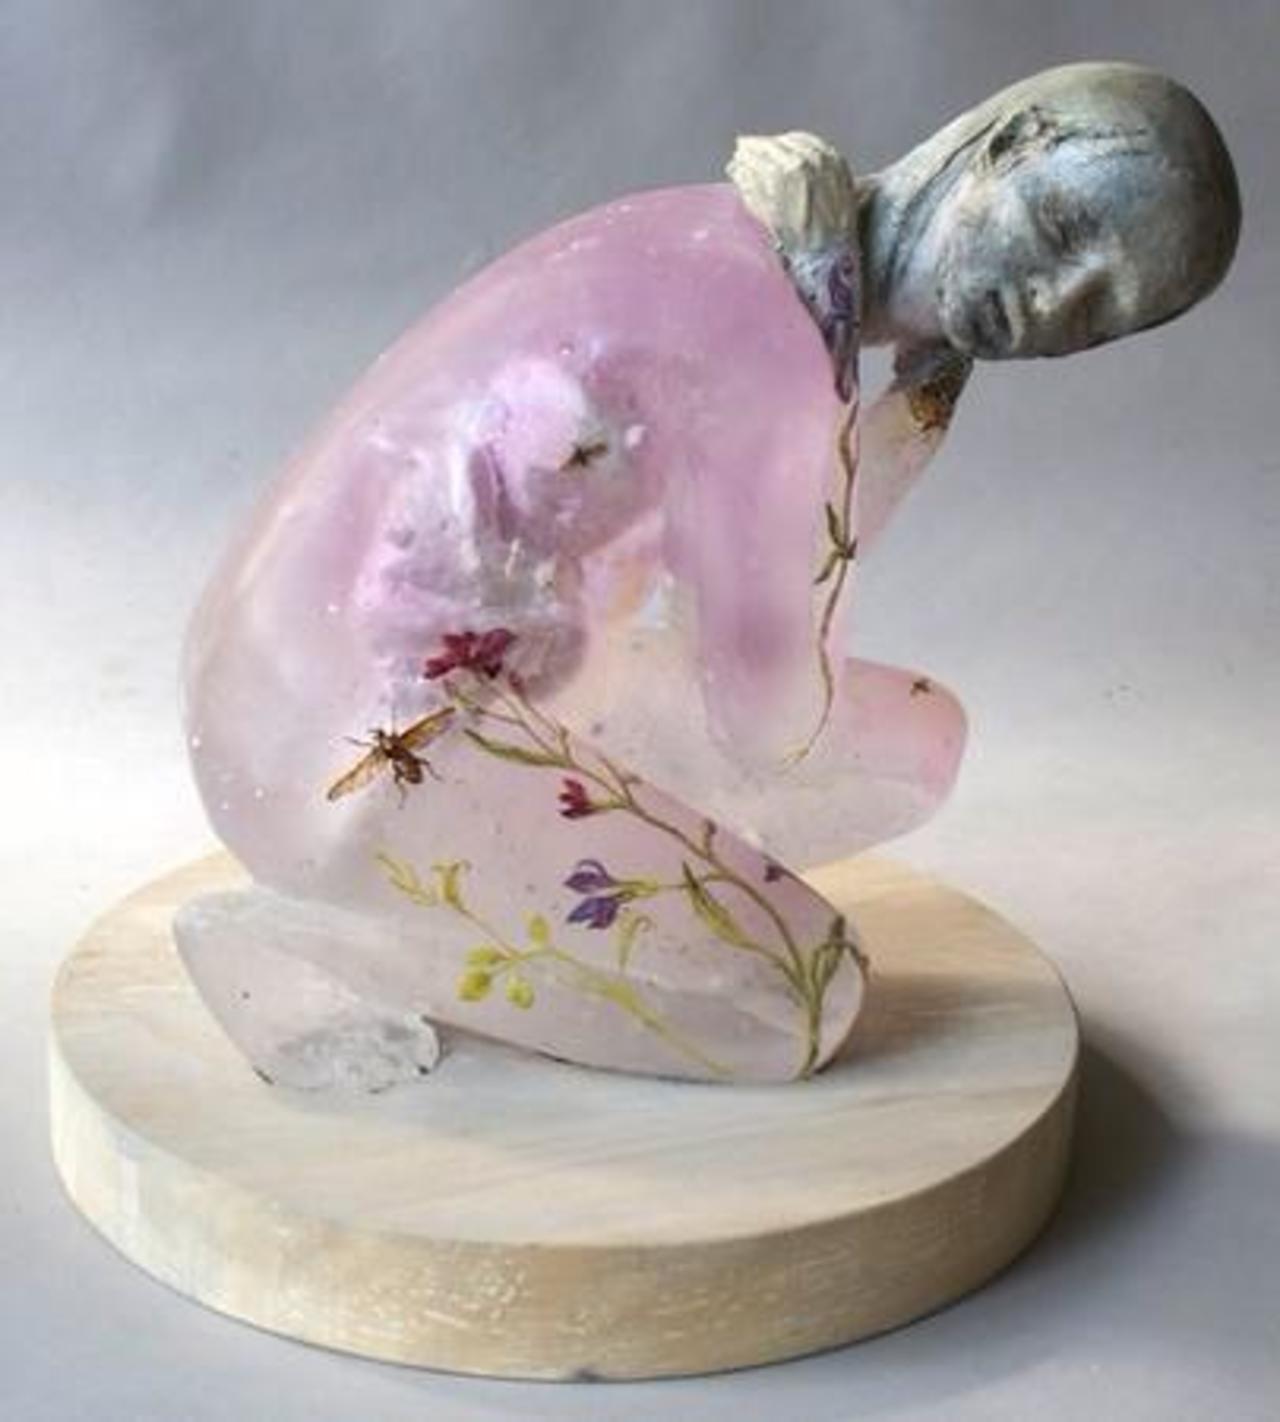 The beautiful sculpture of Christina Bothwell
http://home.epix.net/~bothwell/home.html
#sculpture #art #creativity #ceramics http://t.co/C6YksKptrt